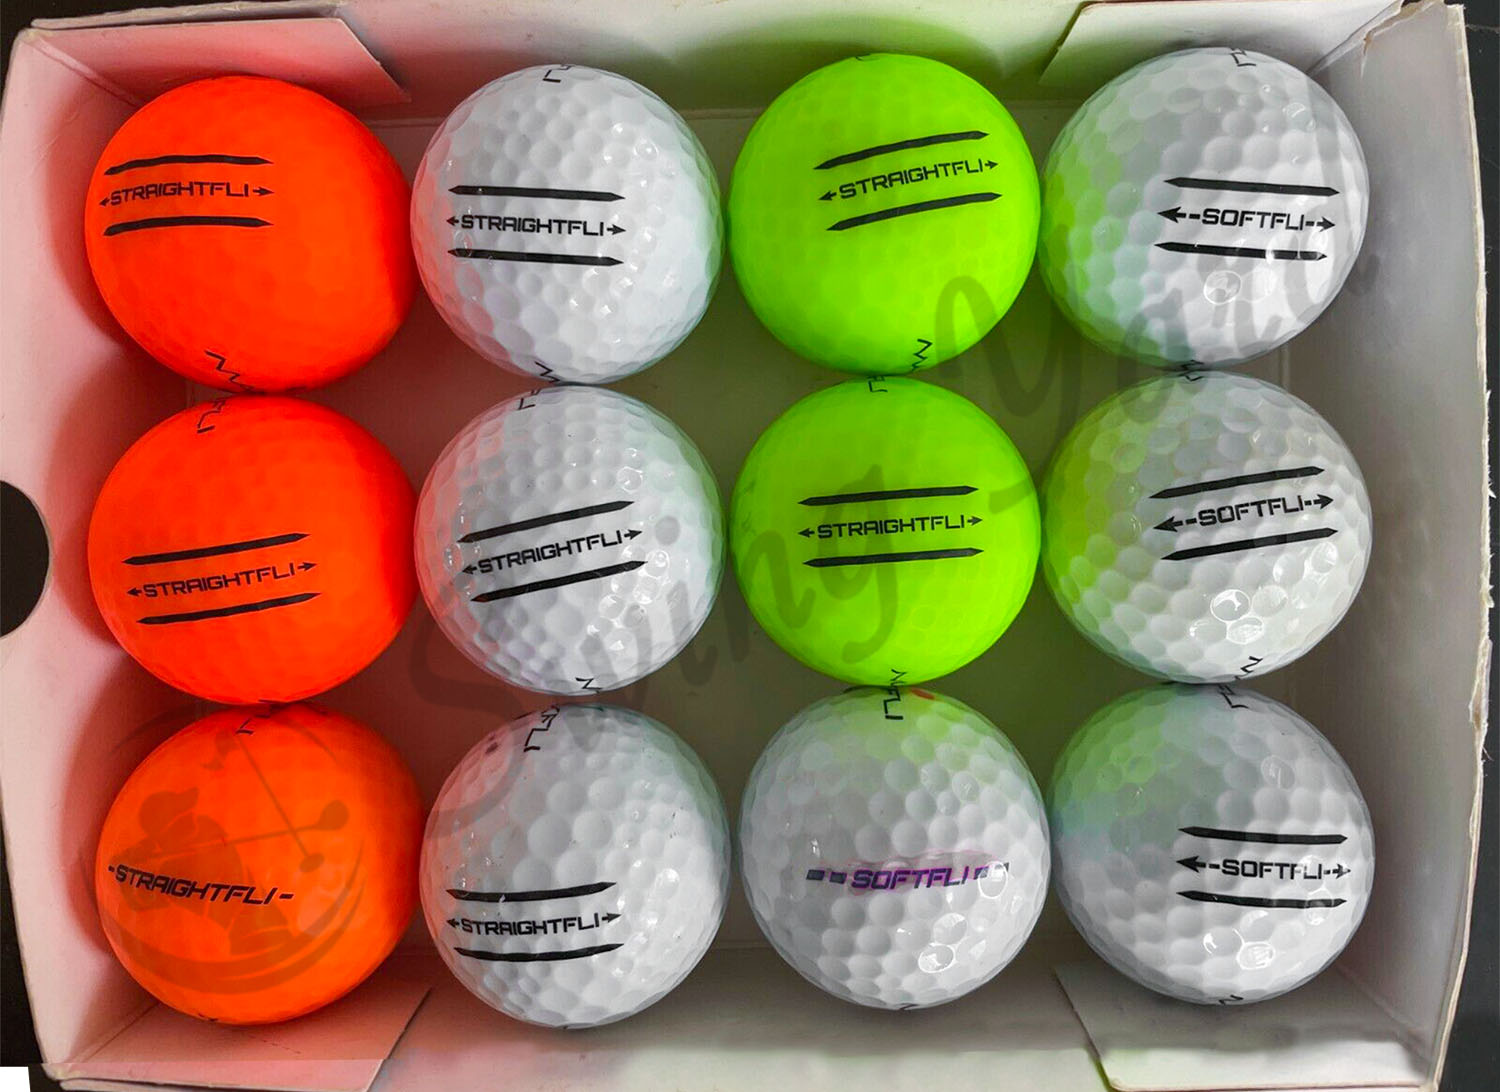 The mix color of Maxfli StraightFli balls inside the box